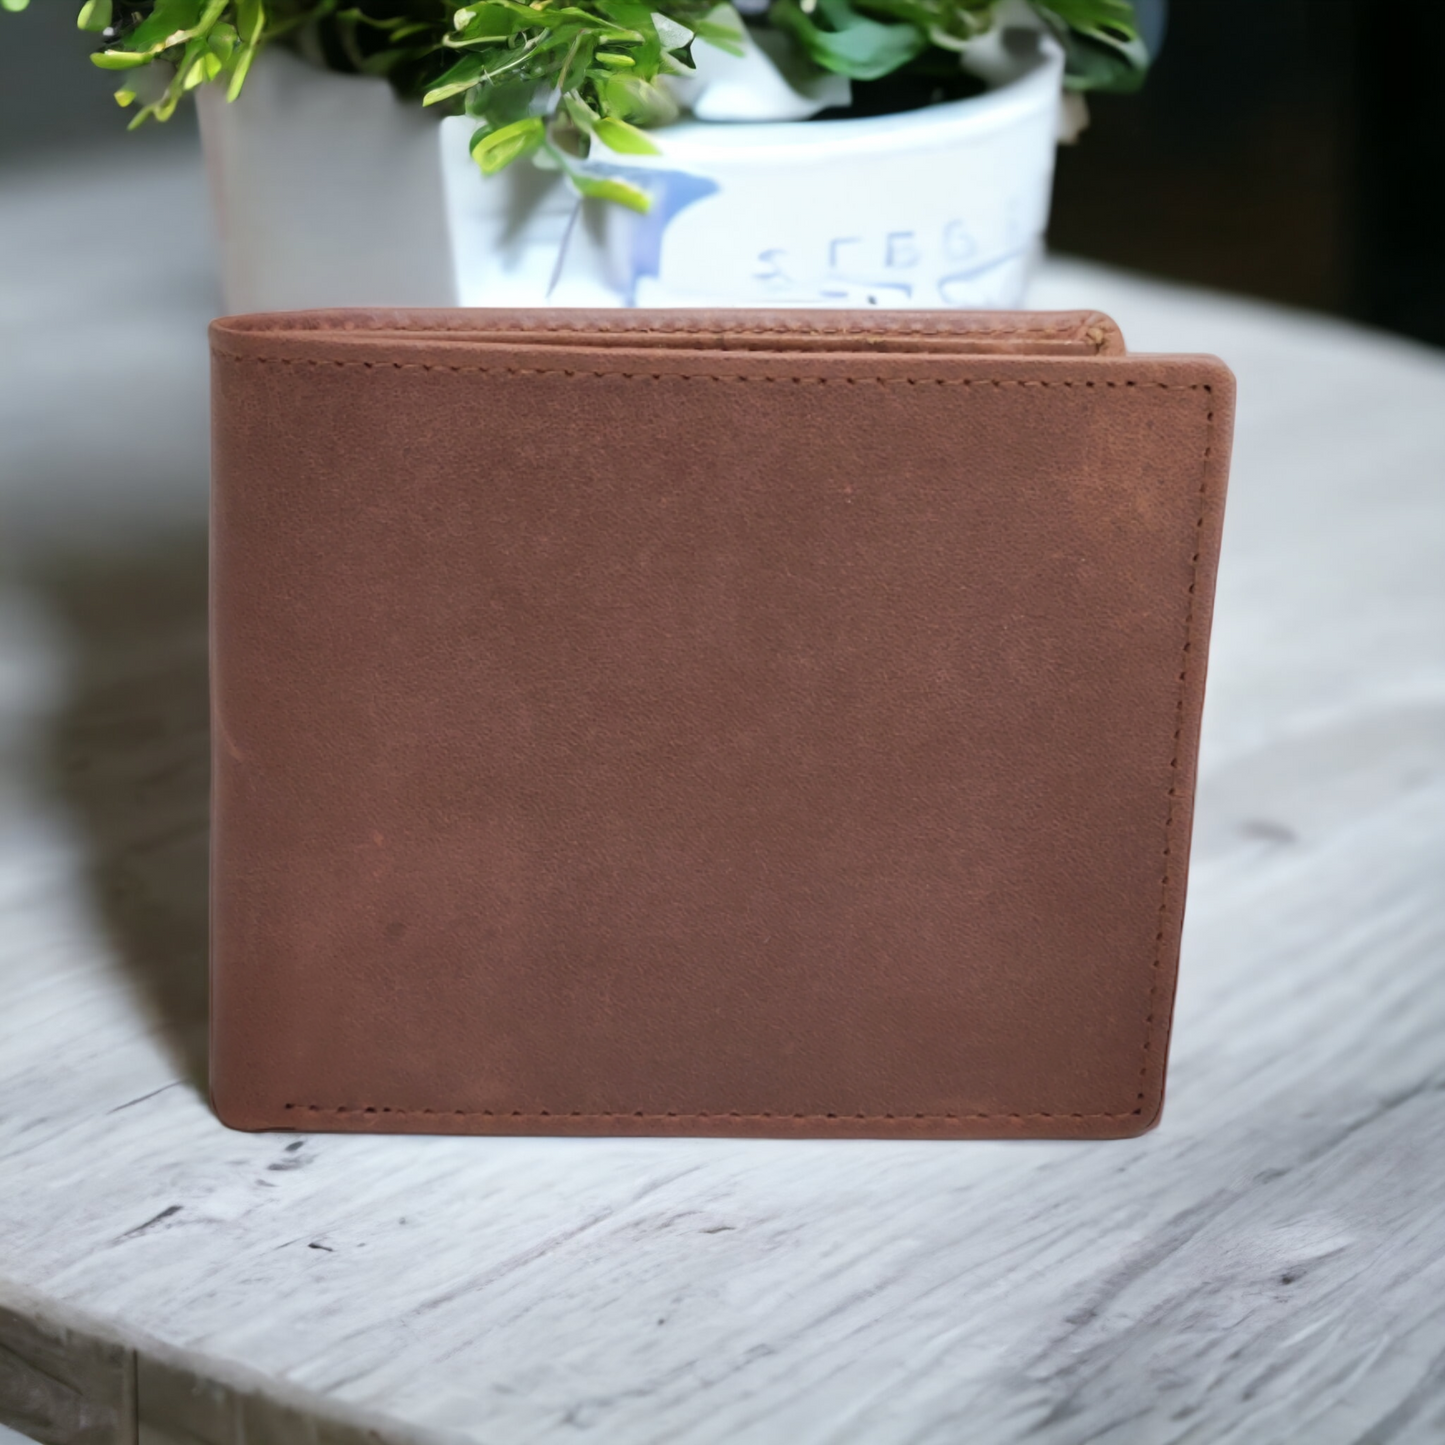 LINDSEY STREET Genuine Leather Wallet for Men | Leather Money Bag | Gift for Him